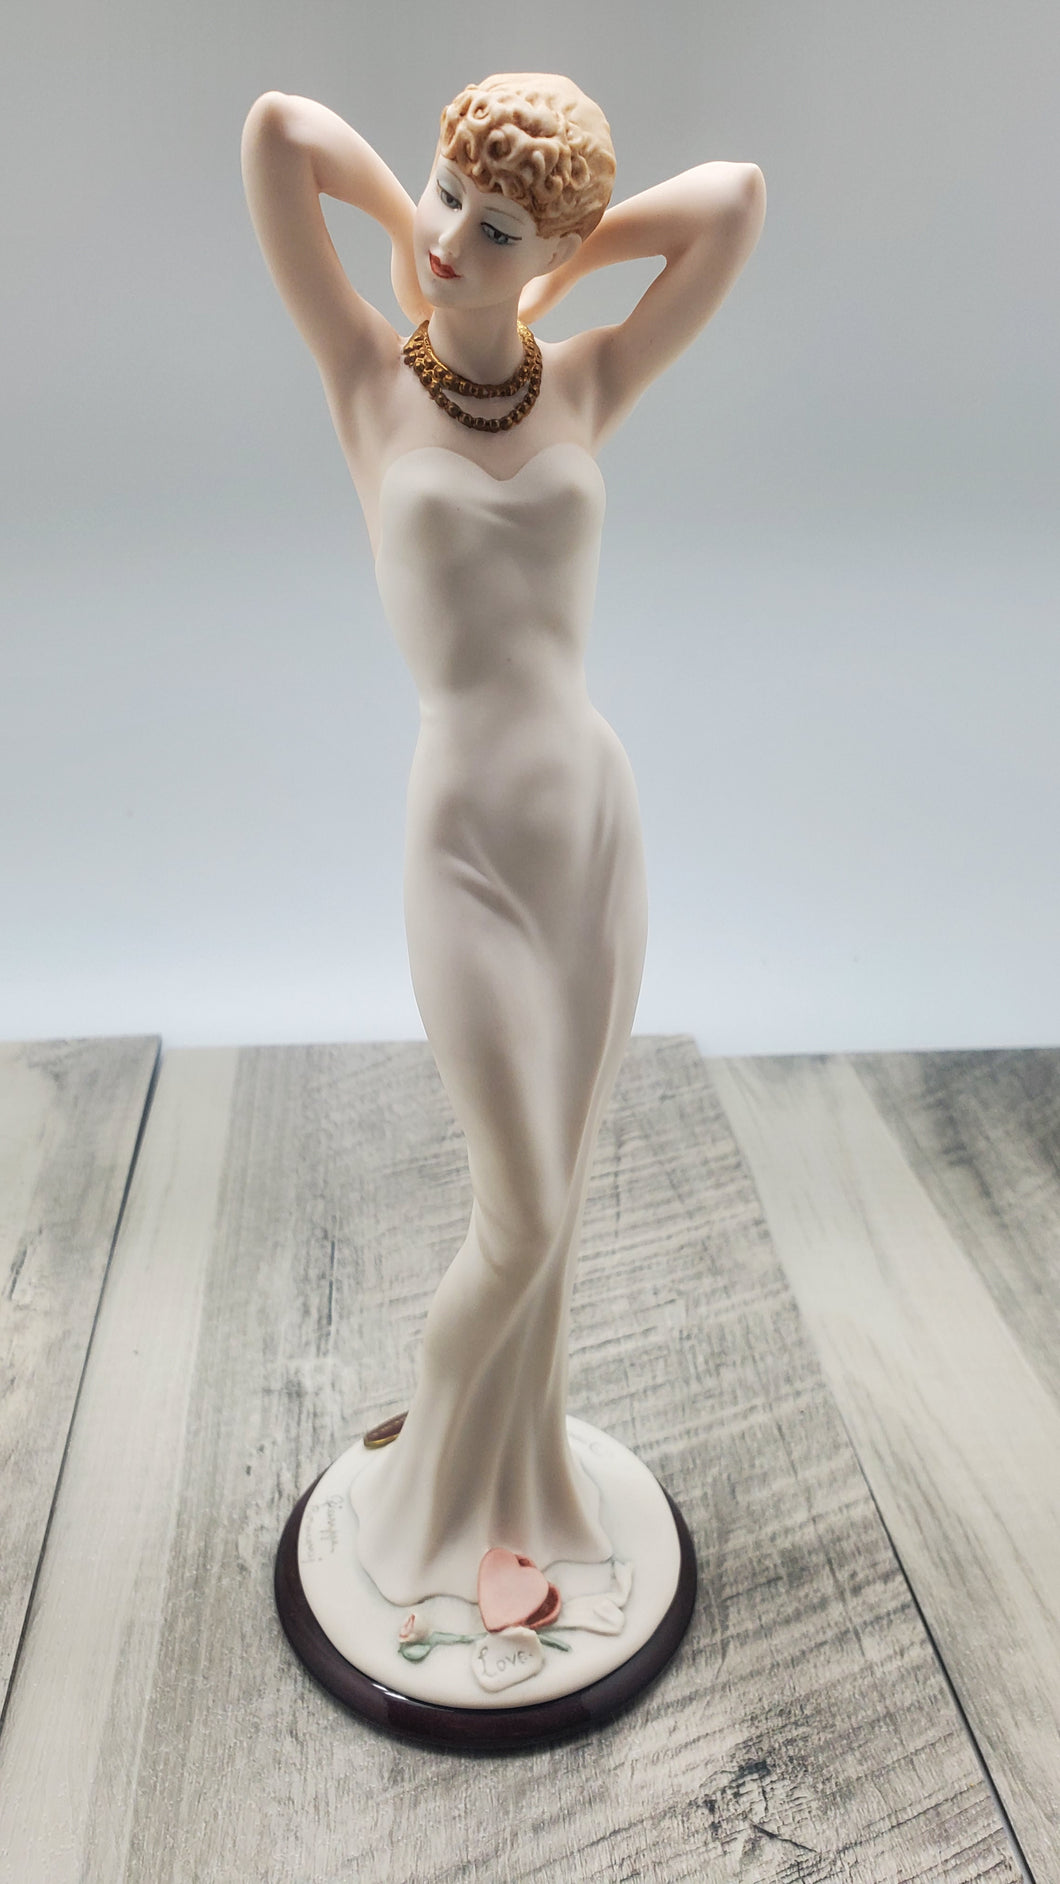 Giuseppe Armani Collection  Figurine 